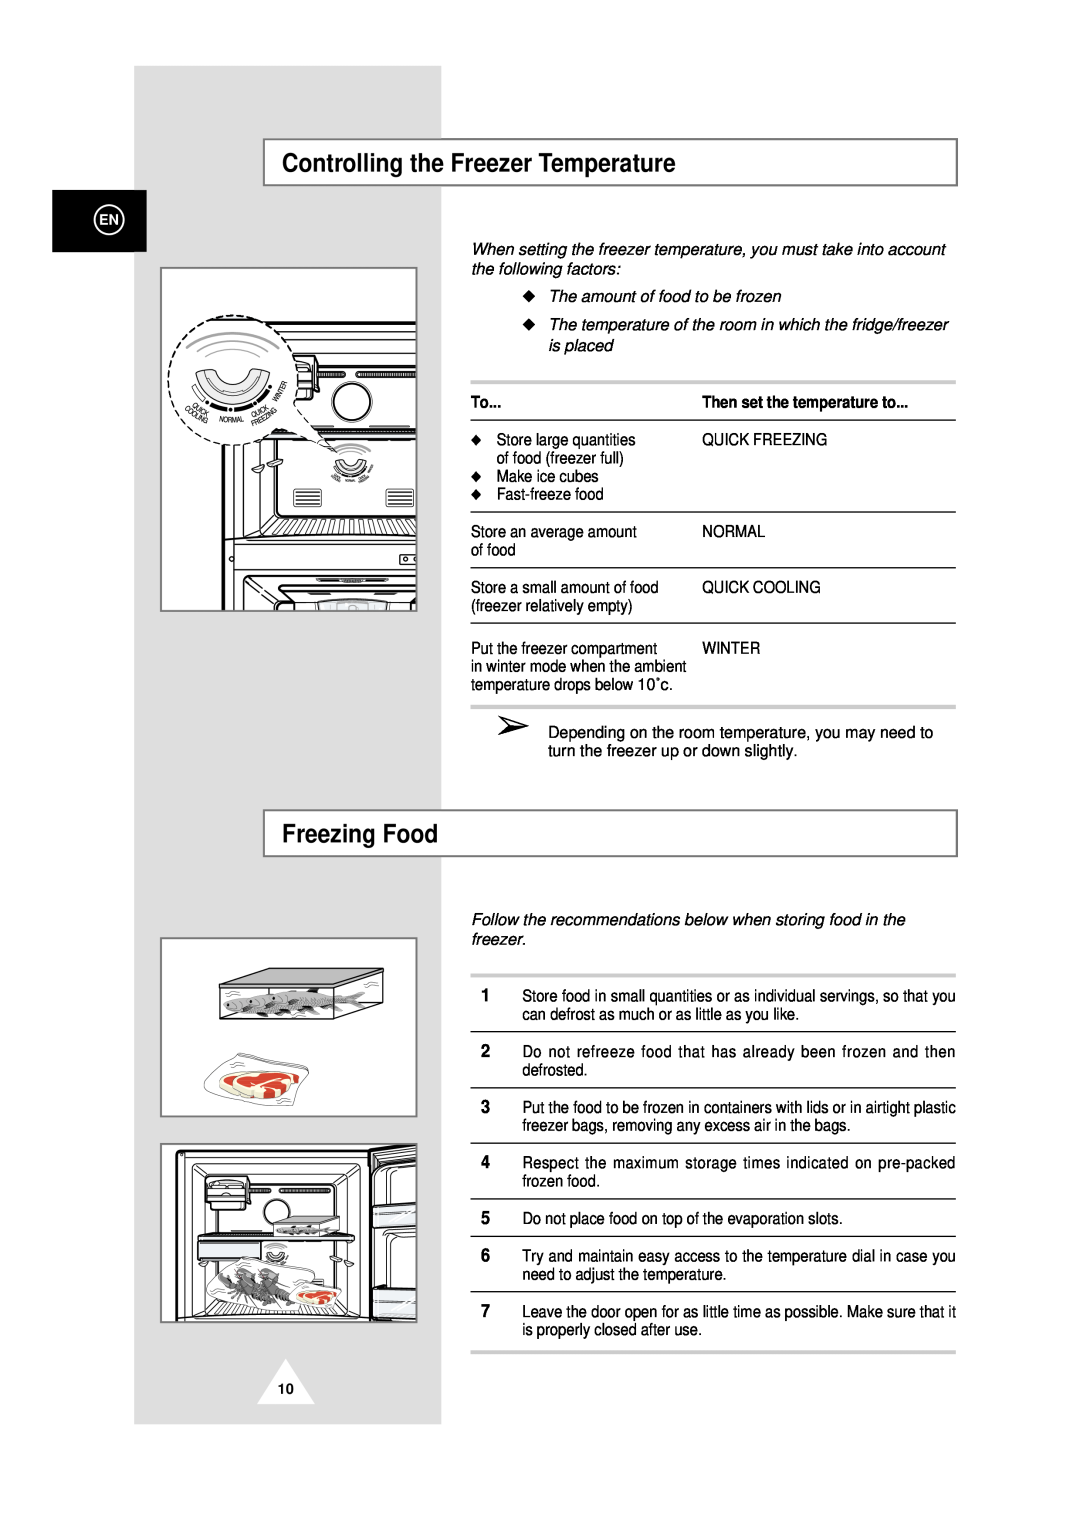 Samsung DA99-00478C instruction manual Controlling the Freezer Temperature, Freezing Food, Then set the temperature to 